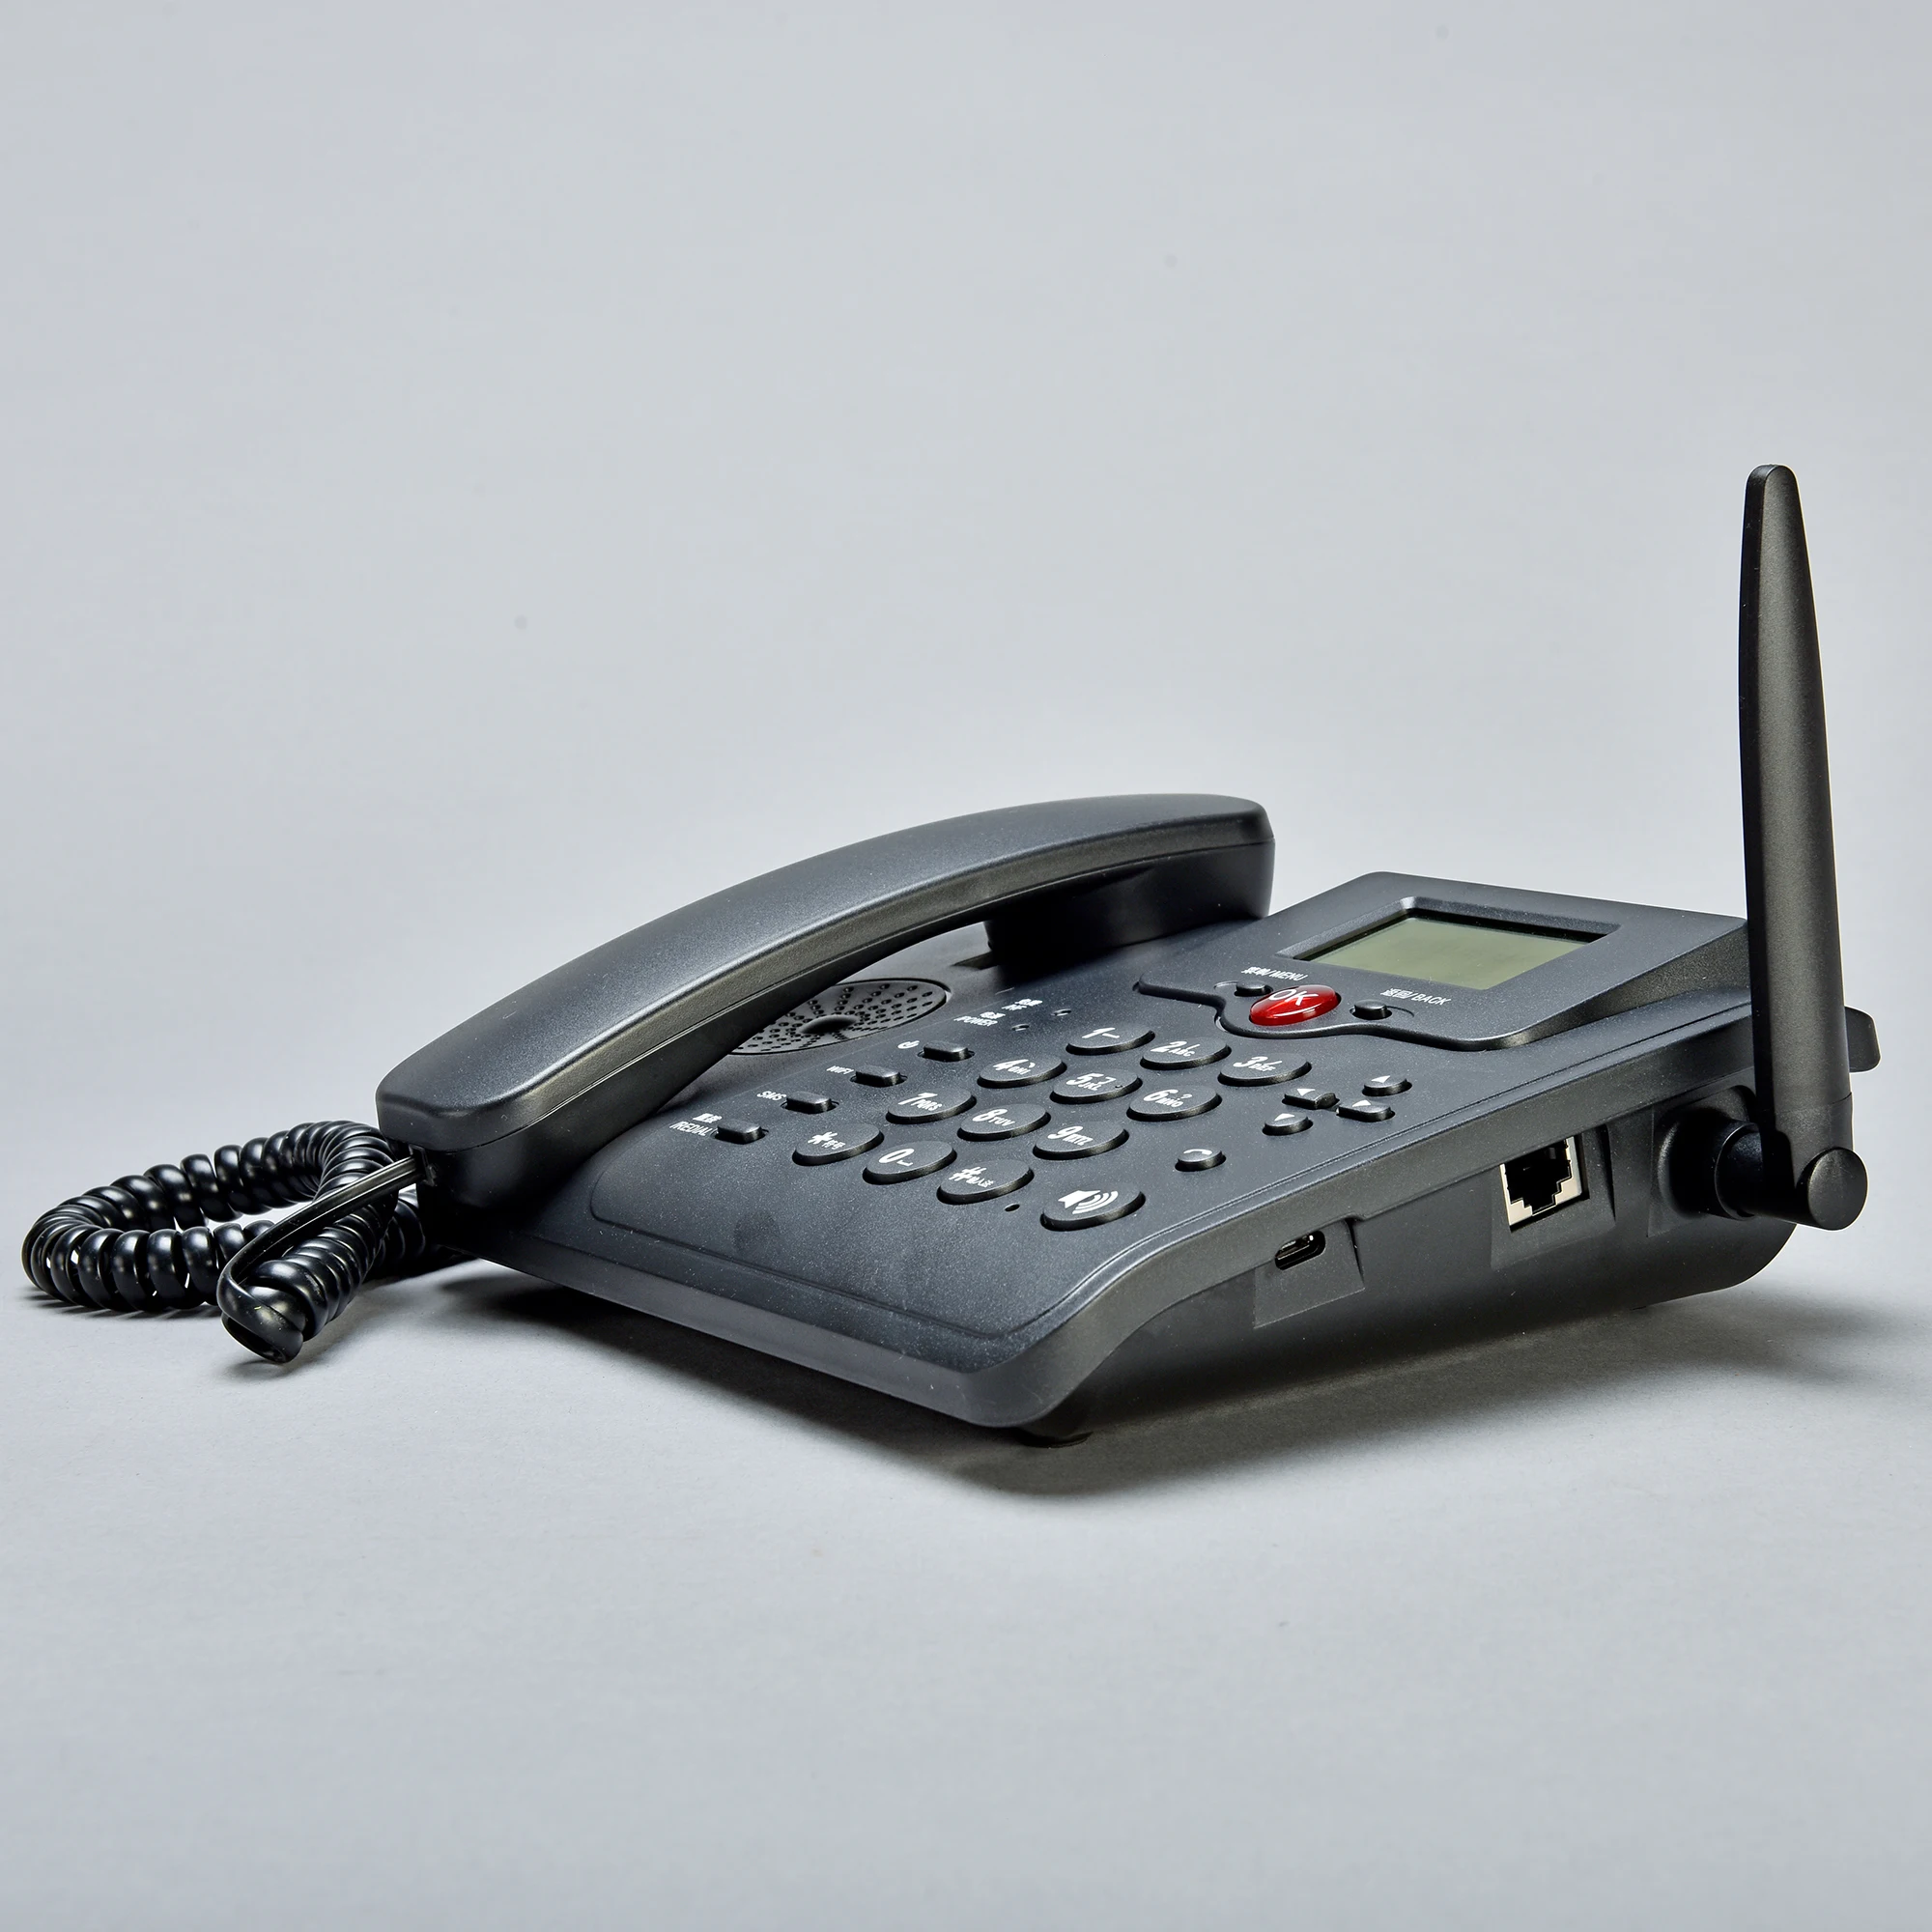 4G LTE Wireless Desktop Phone with WiFi hotspot Cordless telephone with RJ45 MIFI Port  office desktop phone